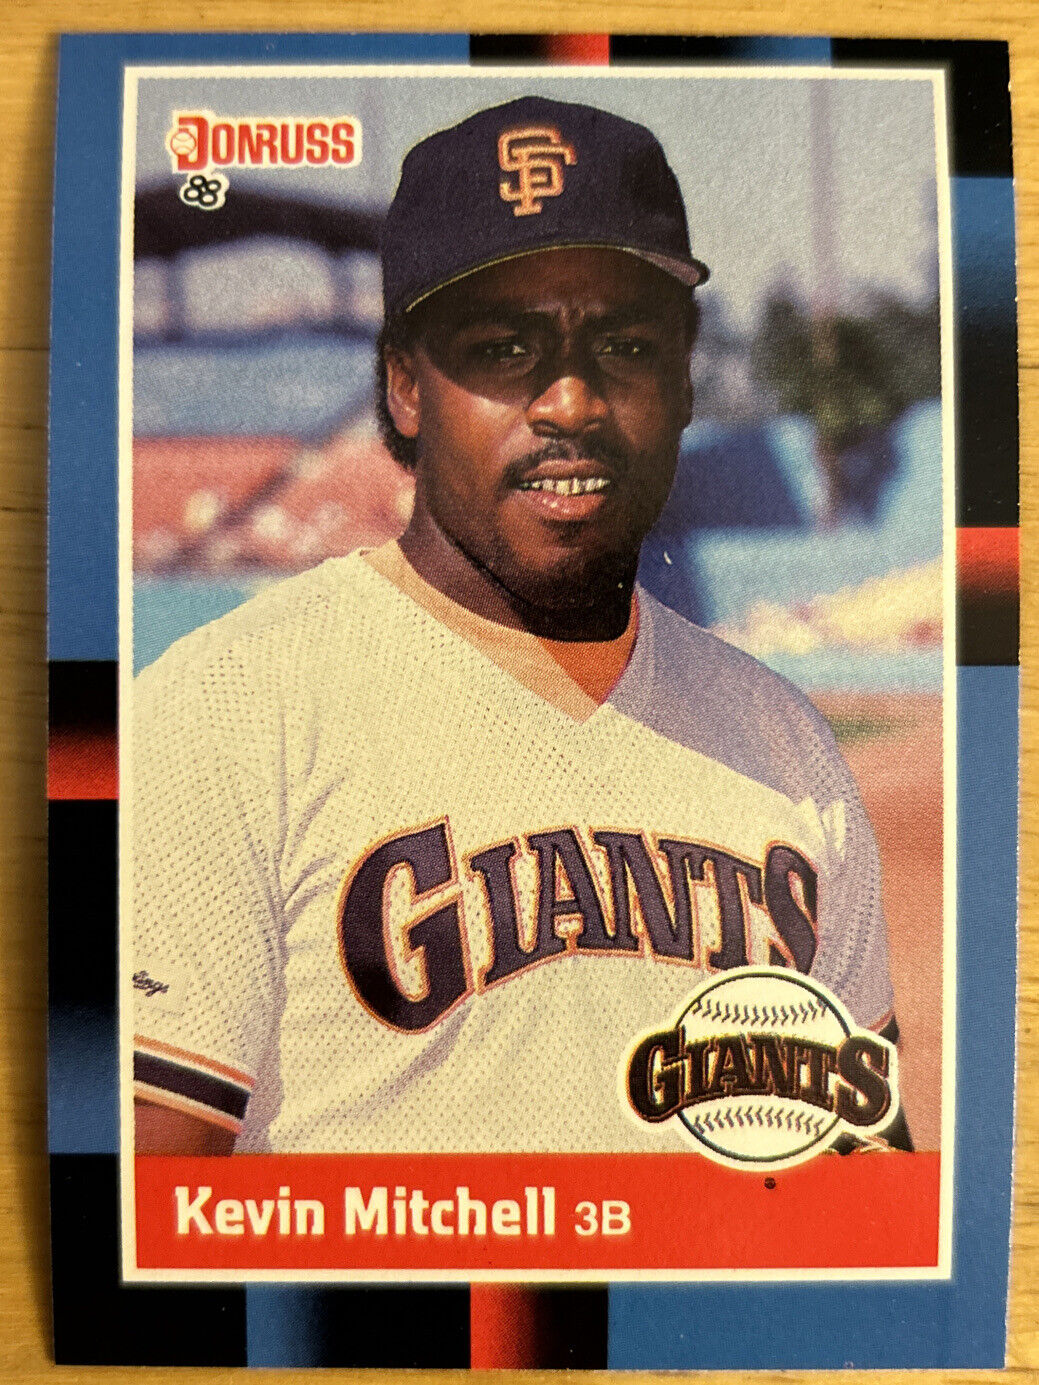 1988 Donruss Kevin Mitchell Baseball Card #66 Giants Third Base Mid-Grade O/C